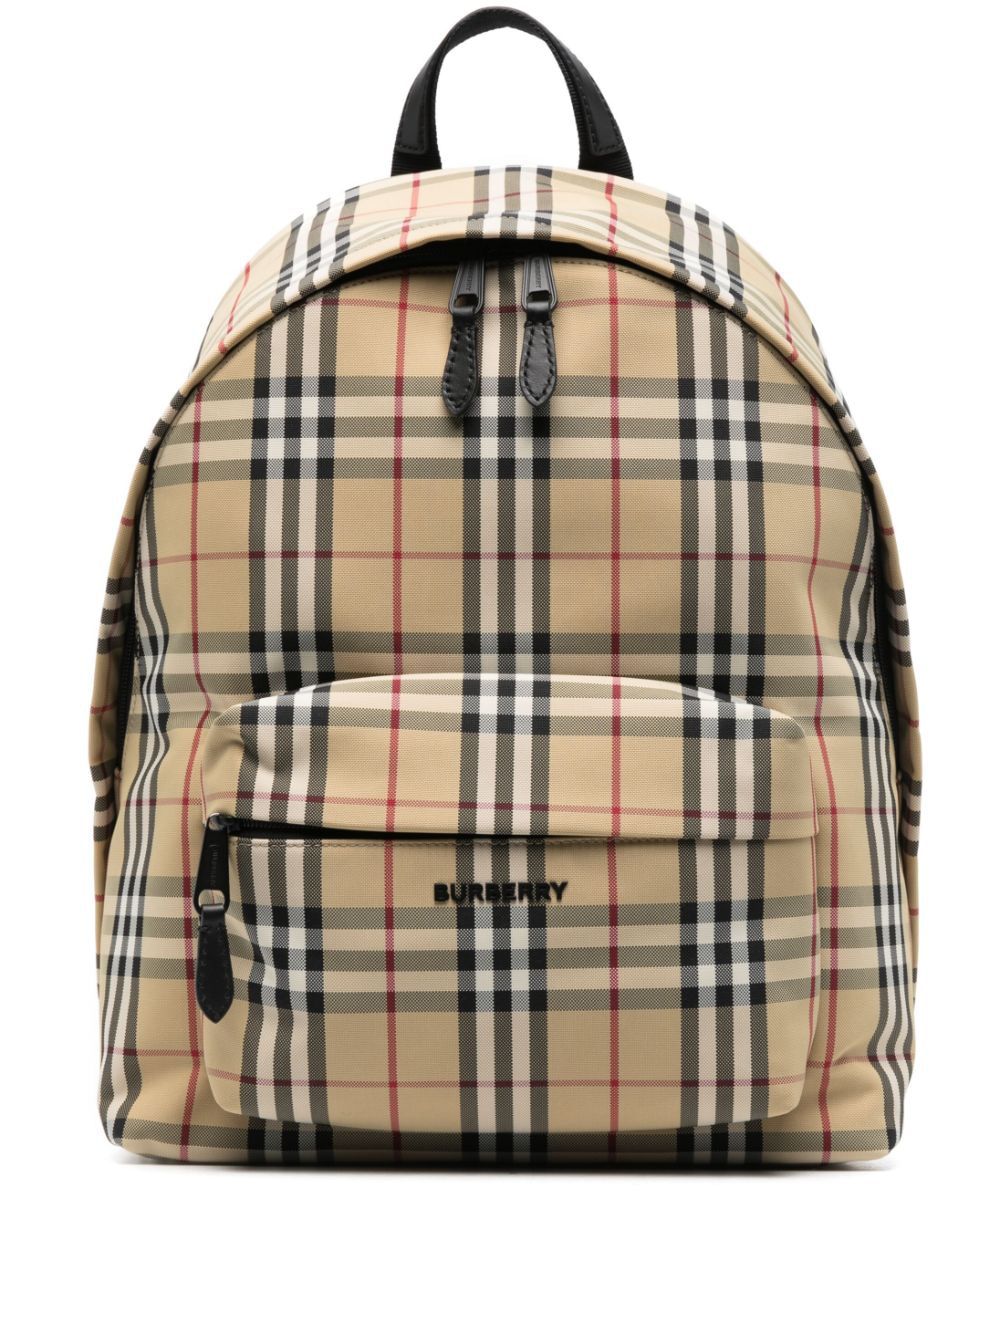 Burberry Printed Nylon Backpack | LOZURI